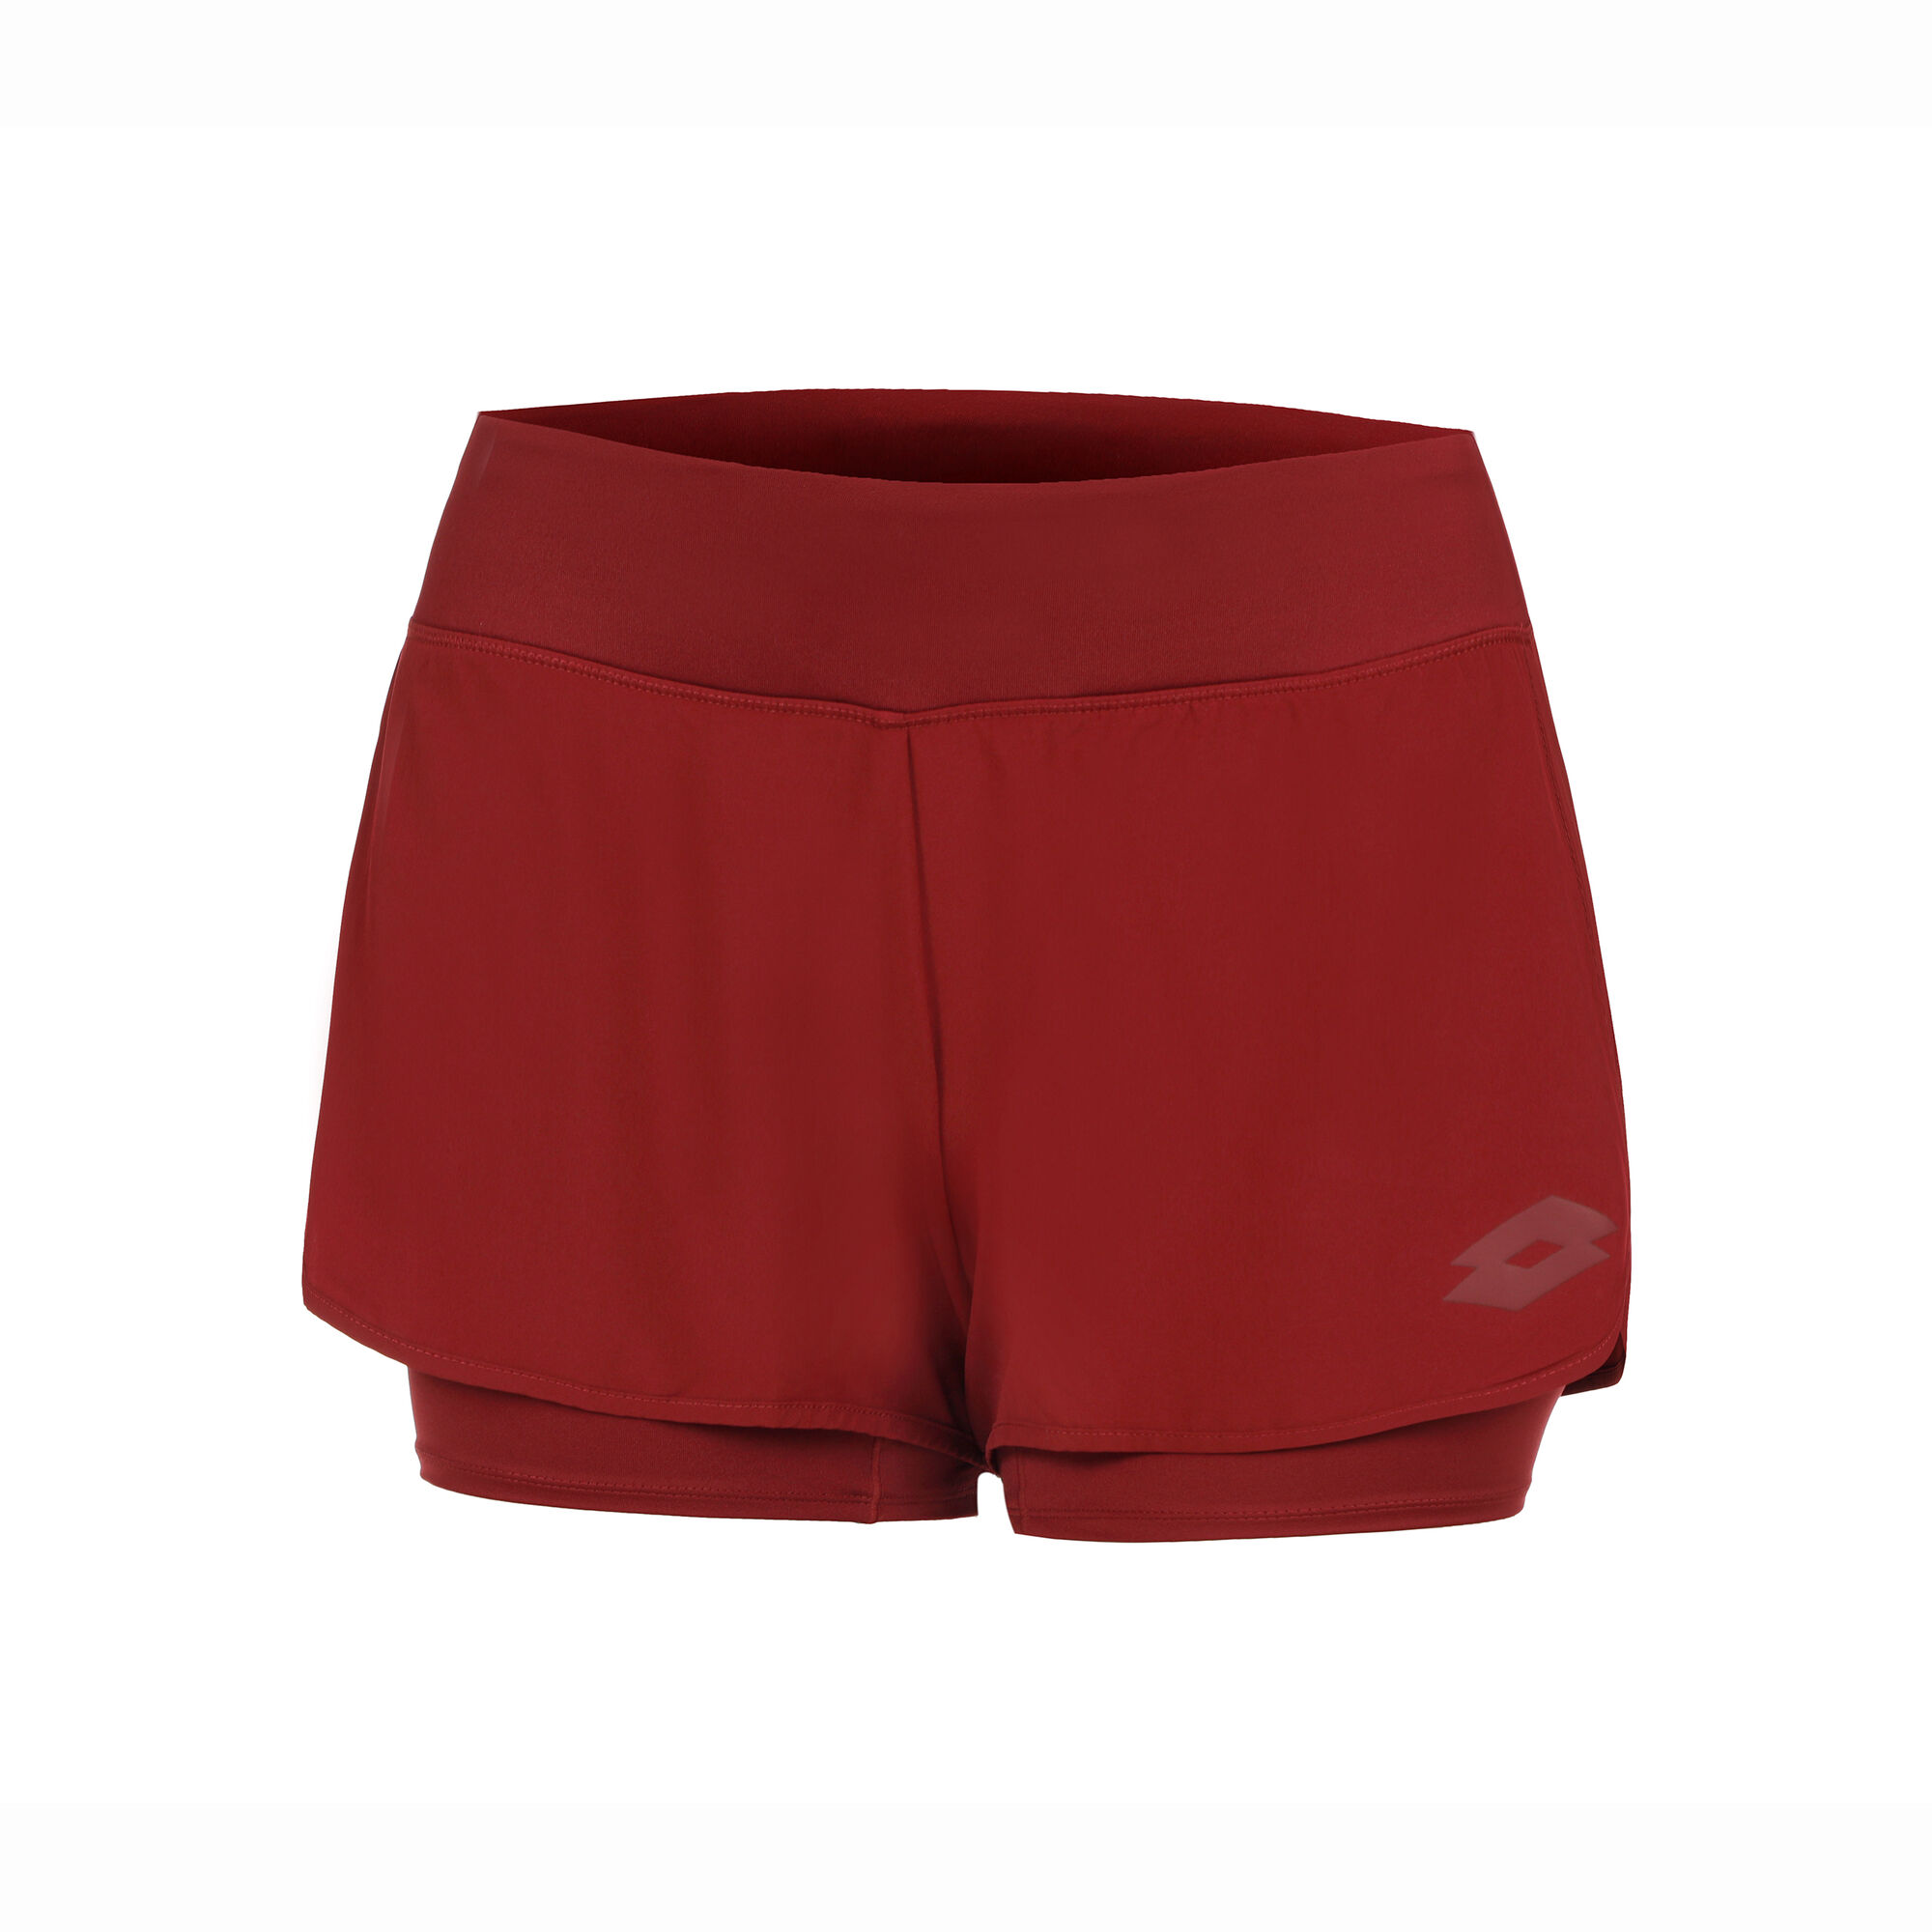 Buy Lotto Tech 1 D1 Shorts Women Dark Red online